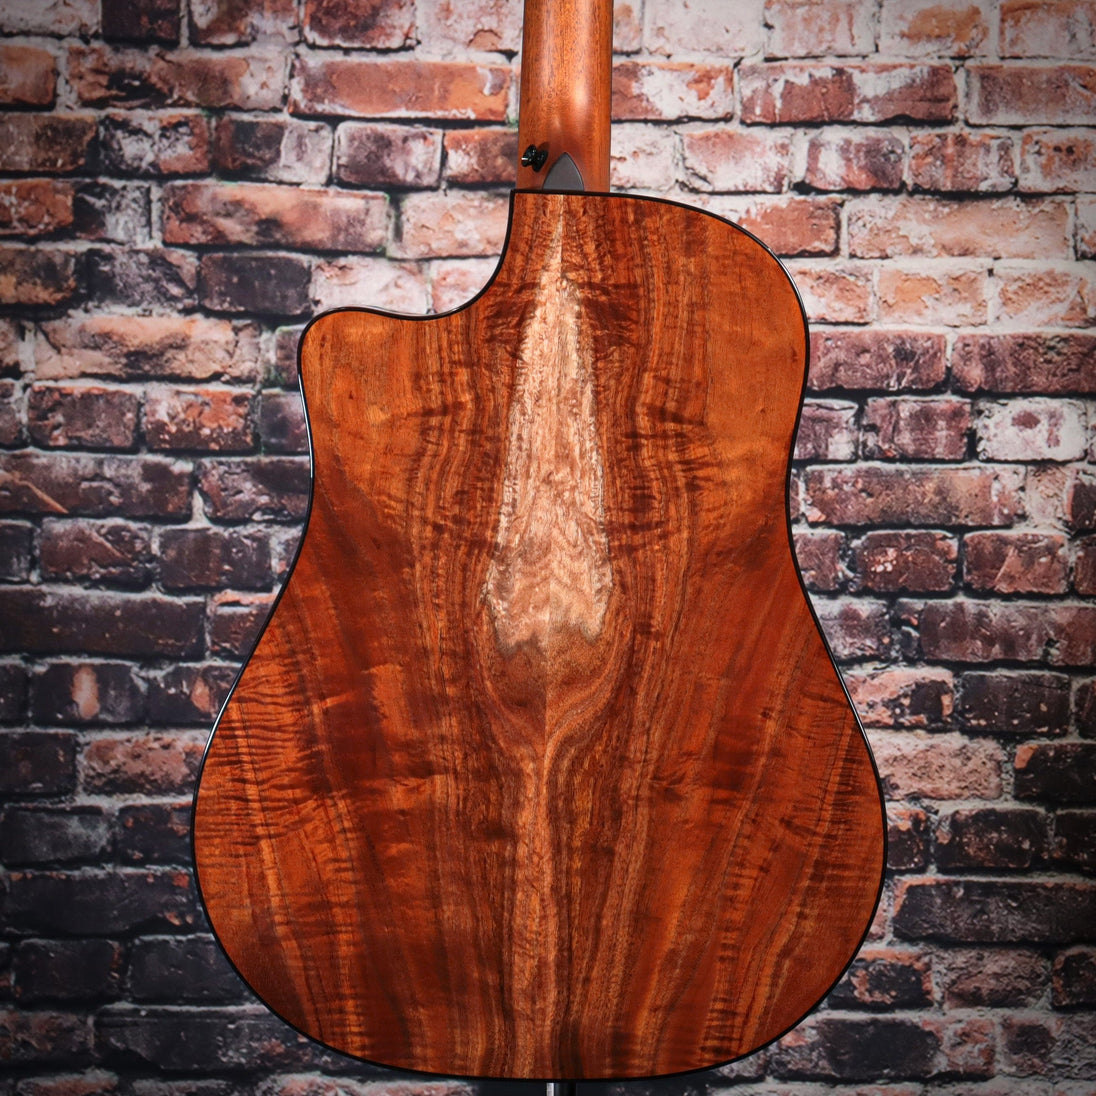 Bedell Limited Edition Dreadnought Acoustic Guitar | Adirondack Spruce, Koa, Mahogony